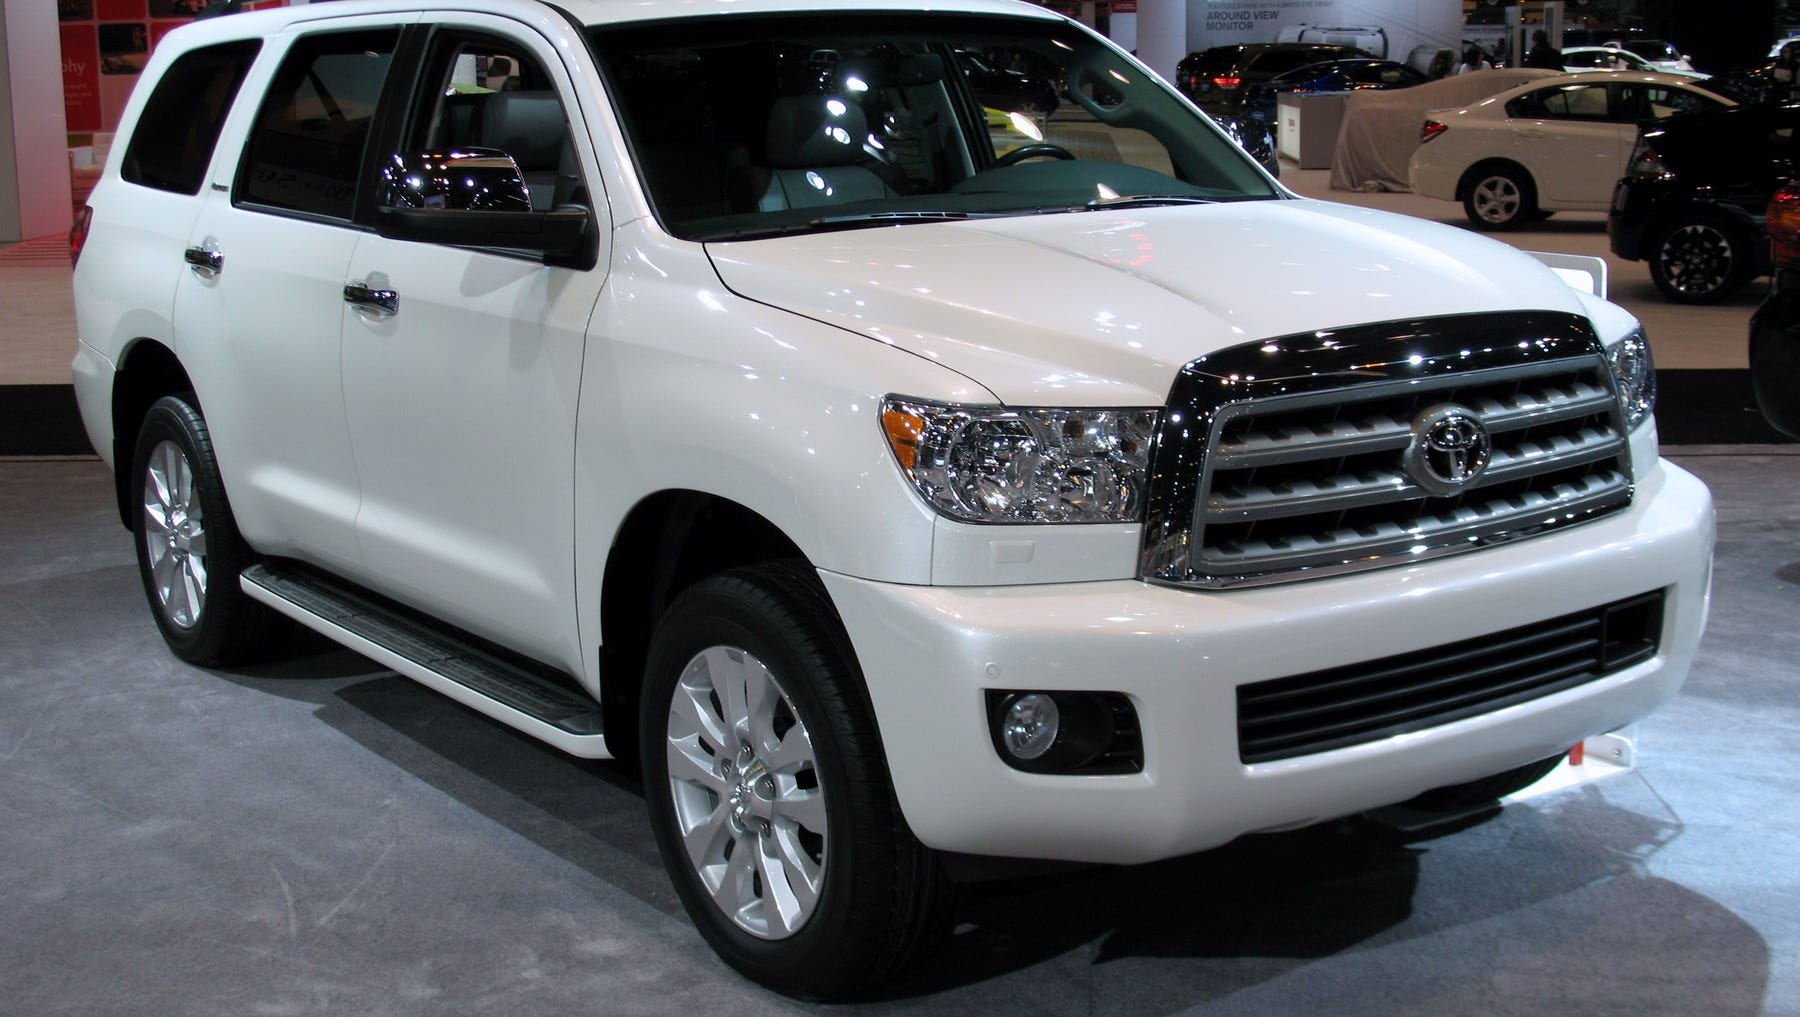 2015 Toyota Sequoia has full-size capabilities